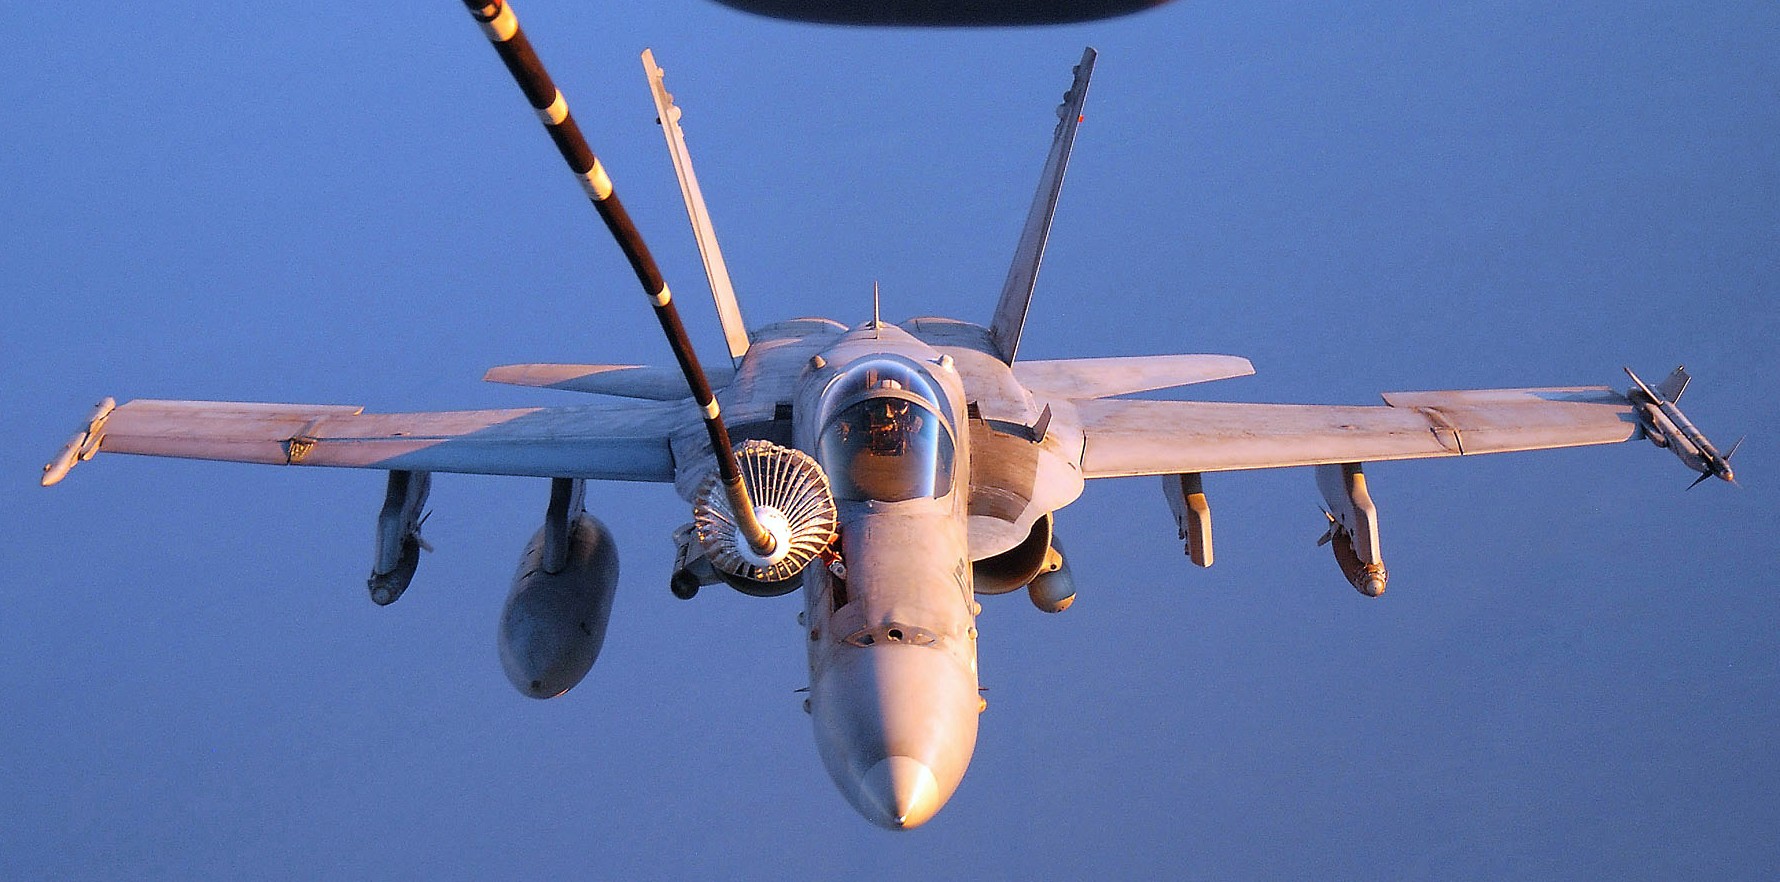 vfa-94 mighty shrikes strike fighter squadron f/a-18c hornet cvw-11 uss nimitz cvn-68 us navy 45p